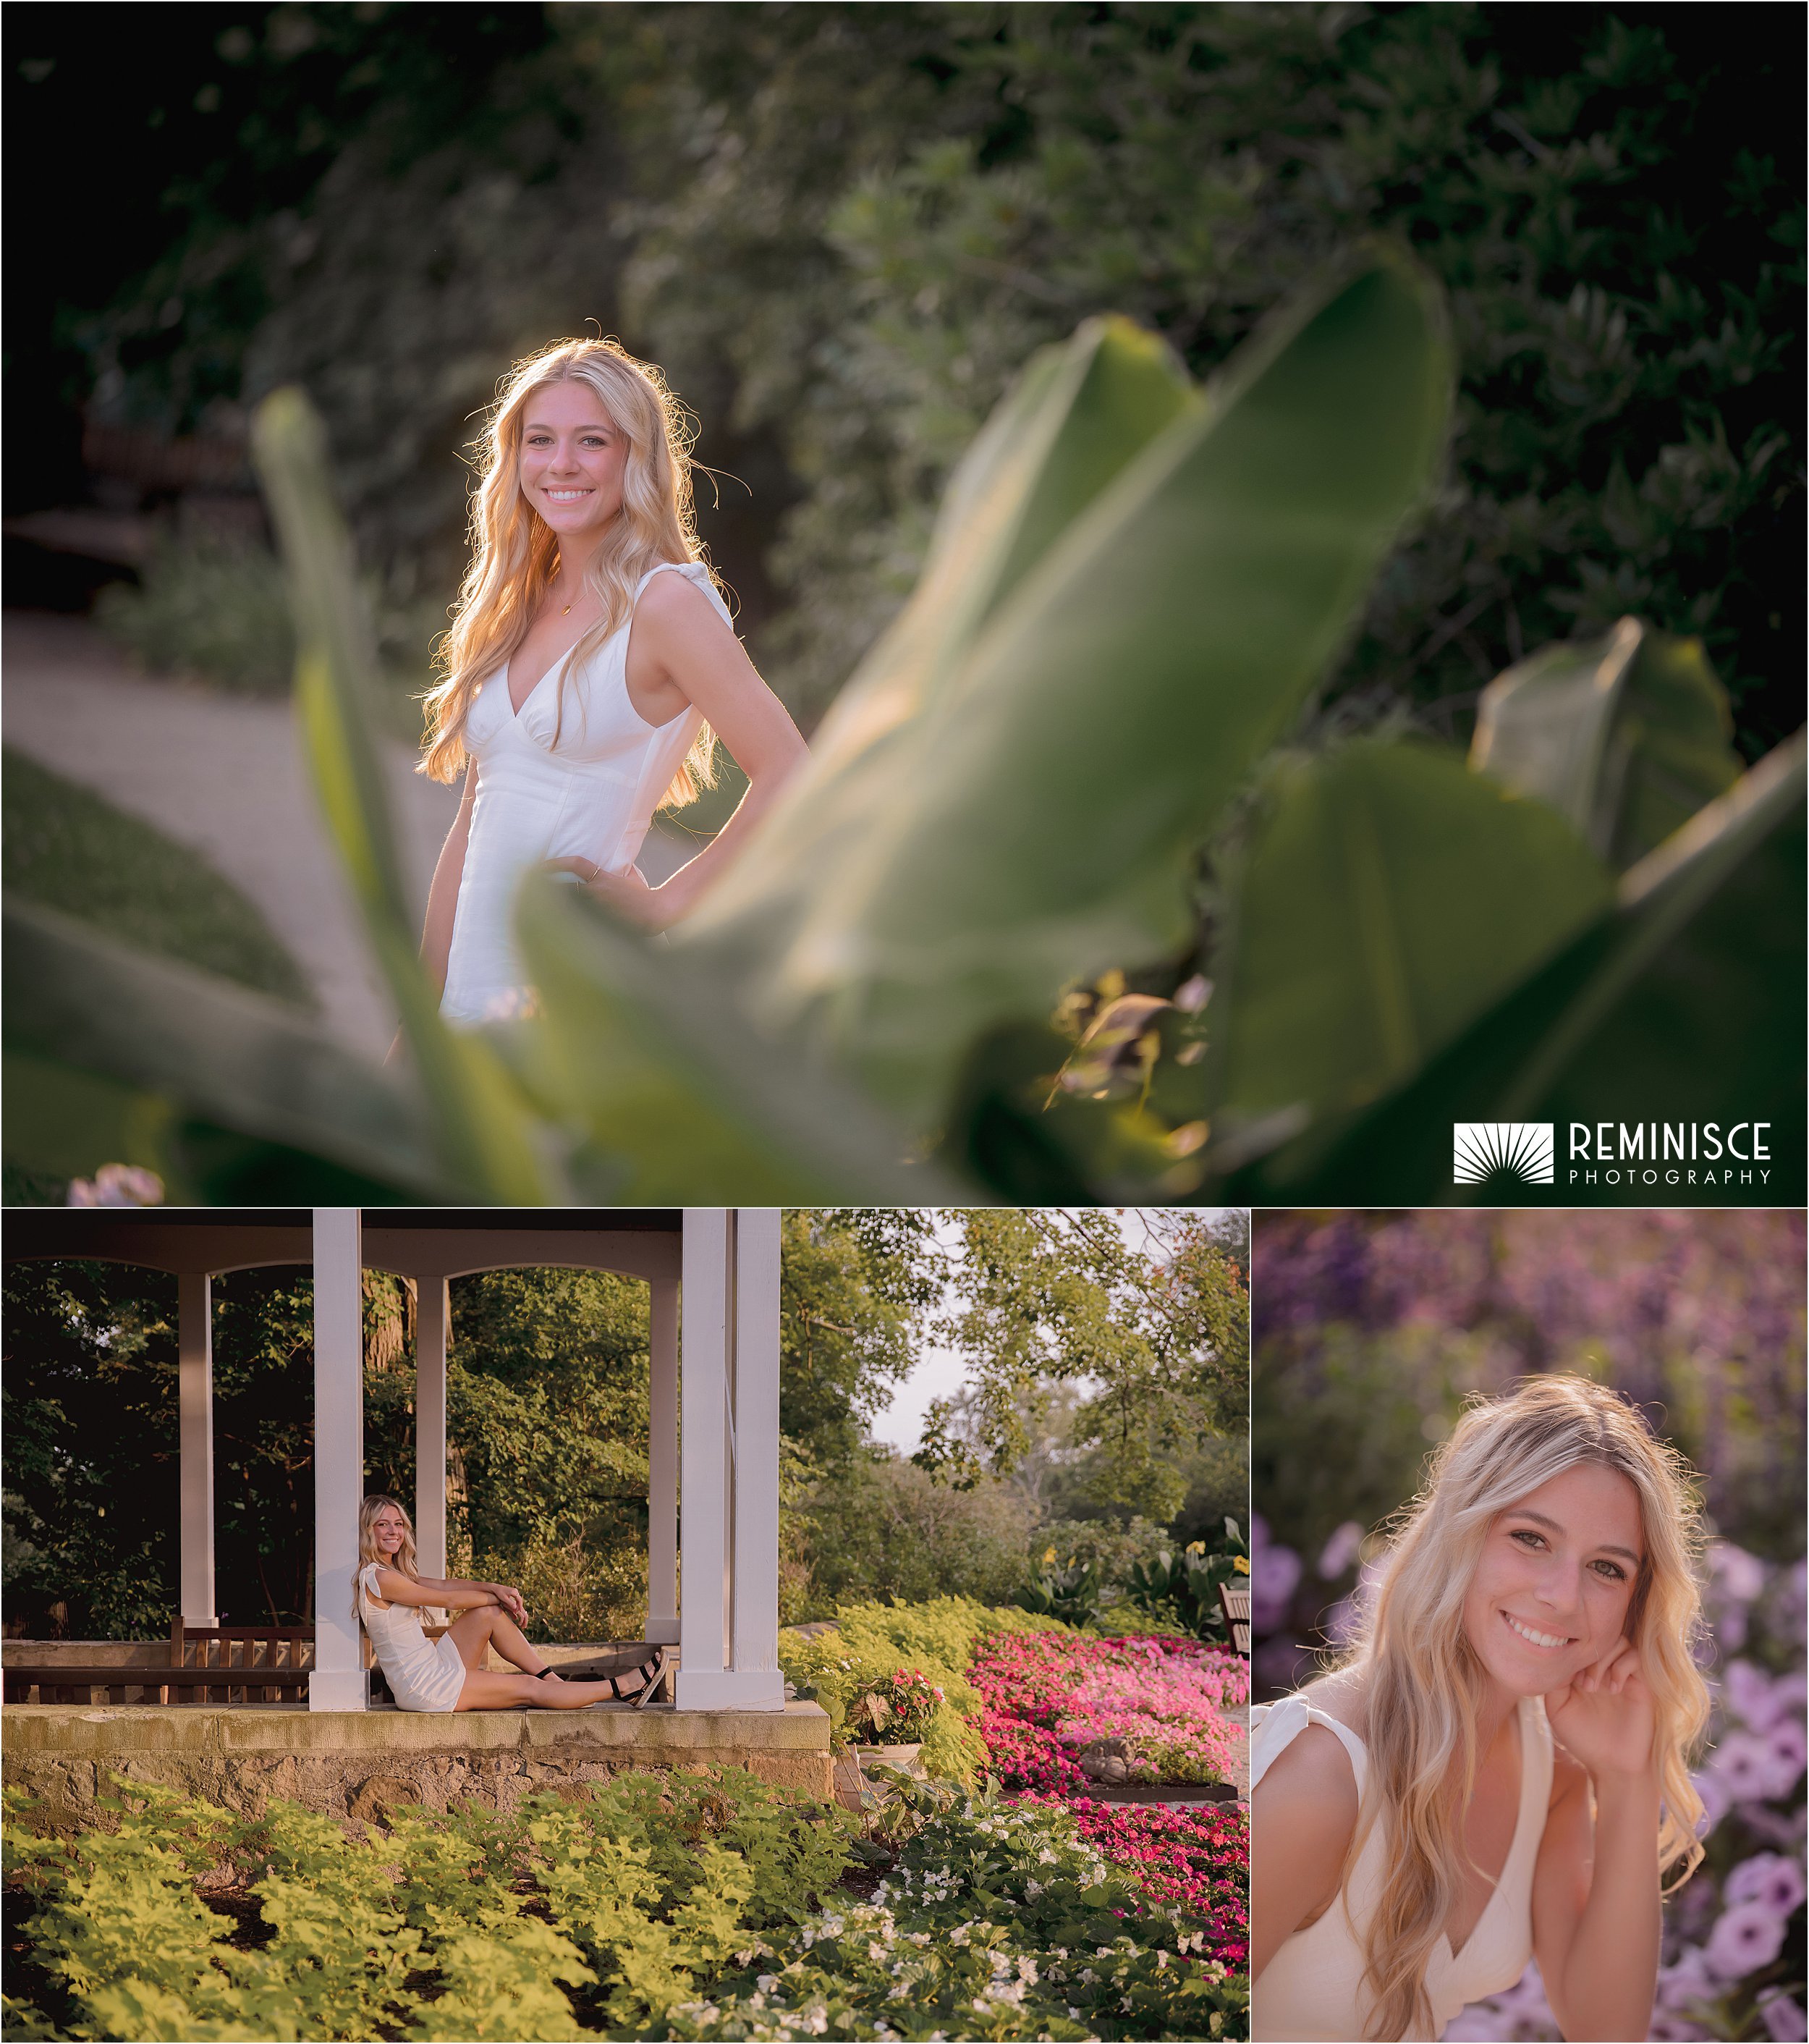 02-senior-photos-summer-botanical-gardens-golden-hour.JPG